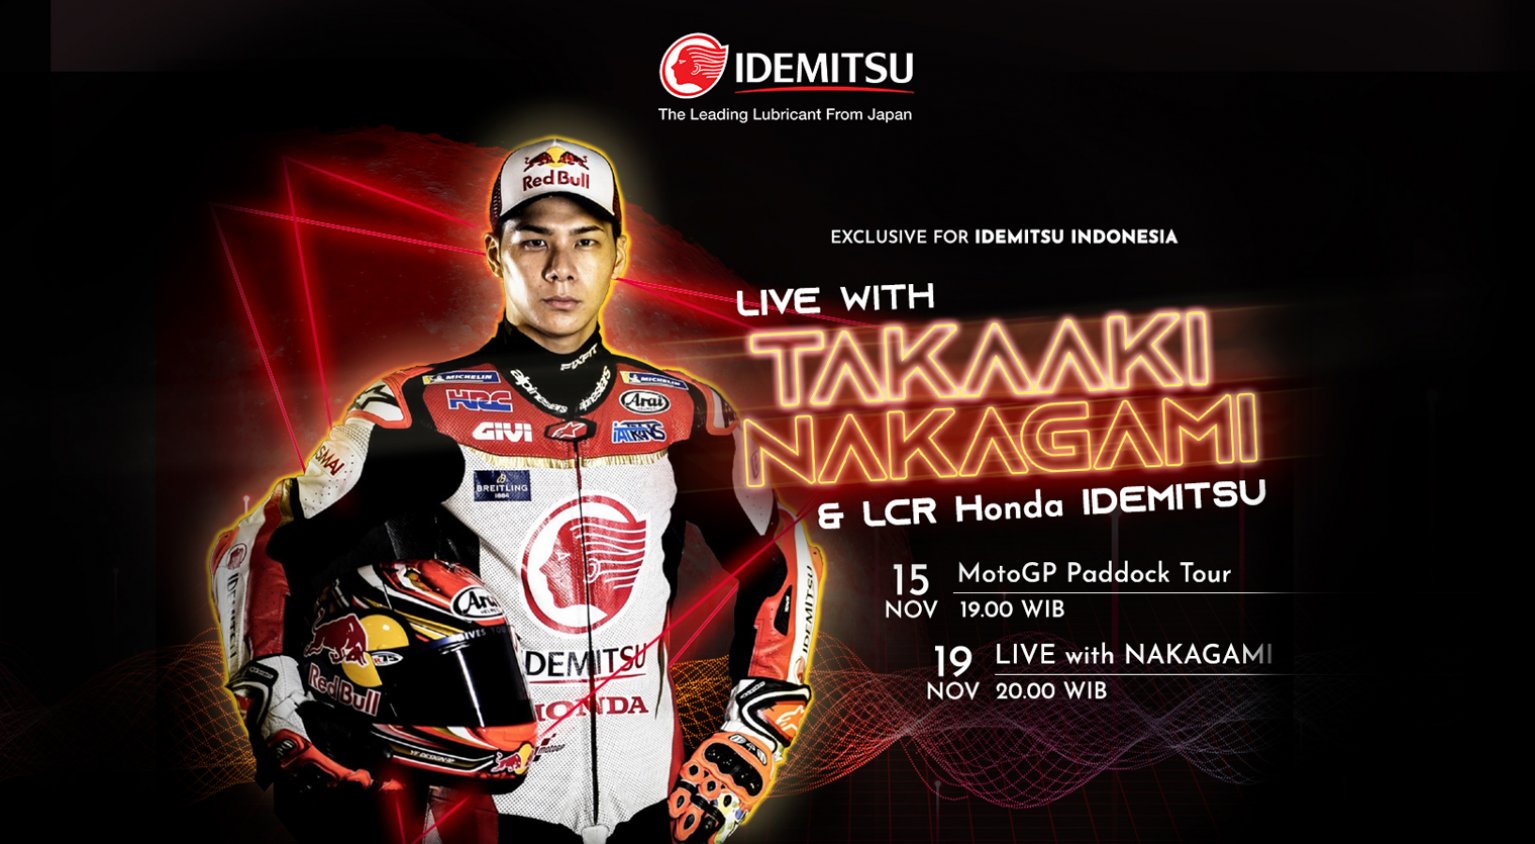 LIVE with TAKAAKI NAKAGAMI & LCR HONDA Team